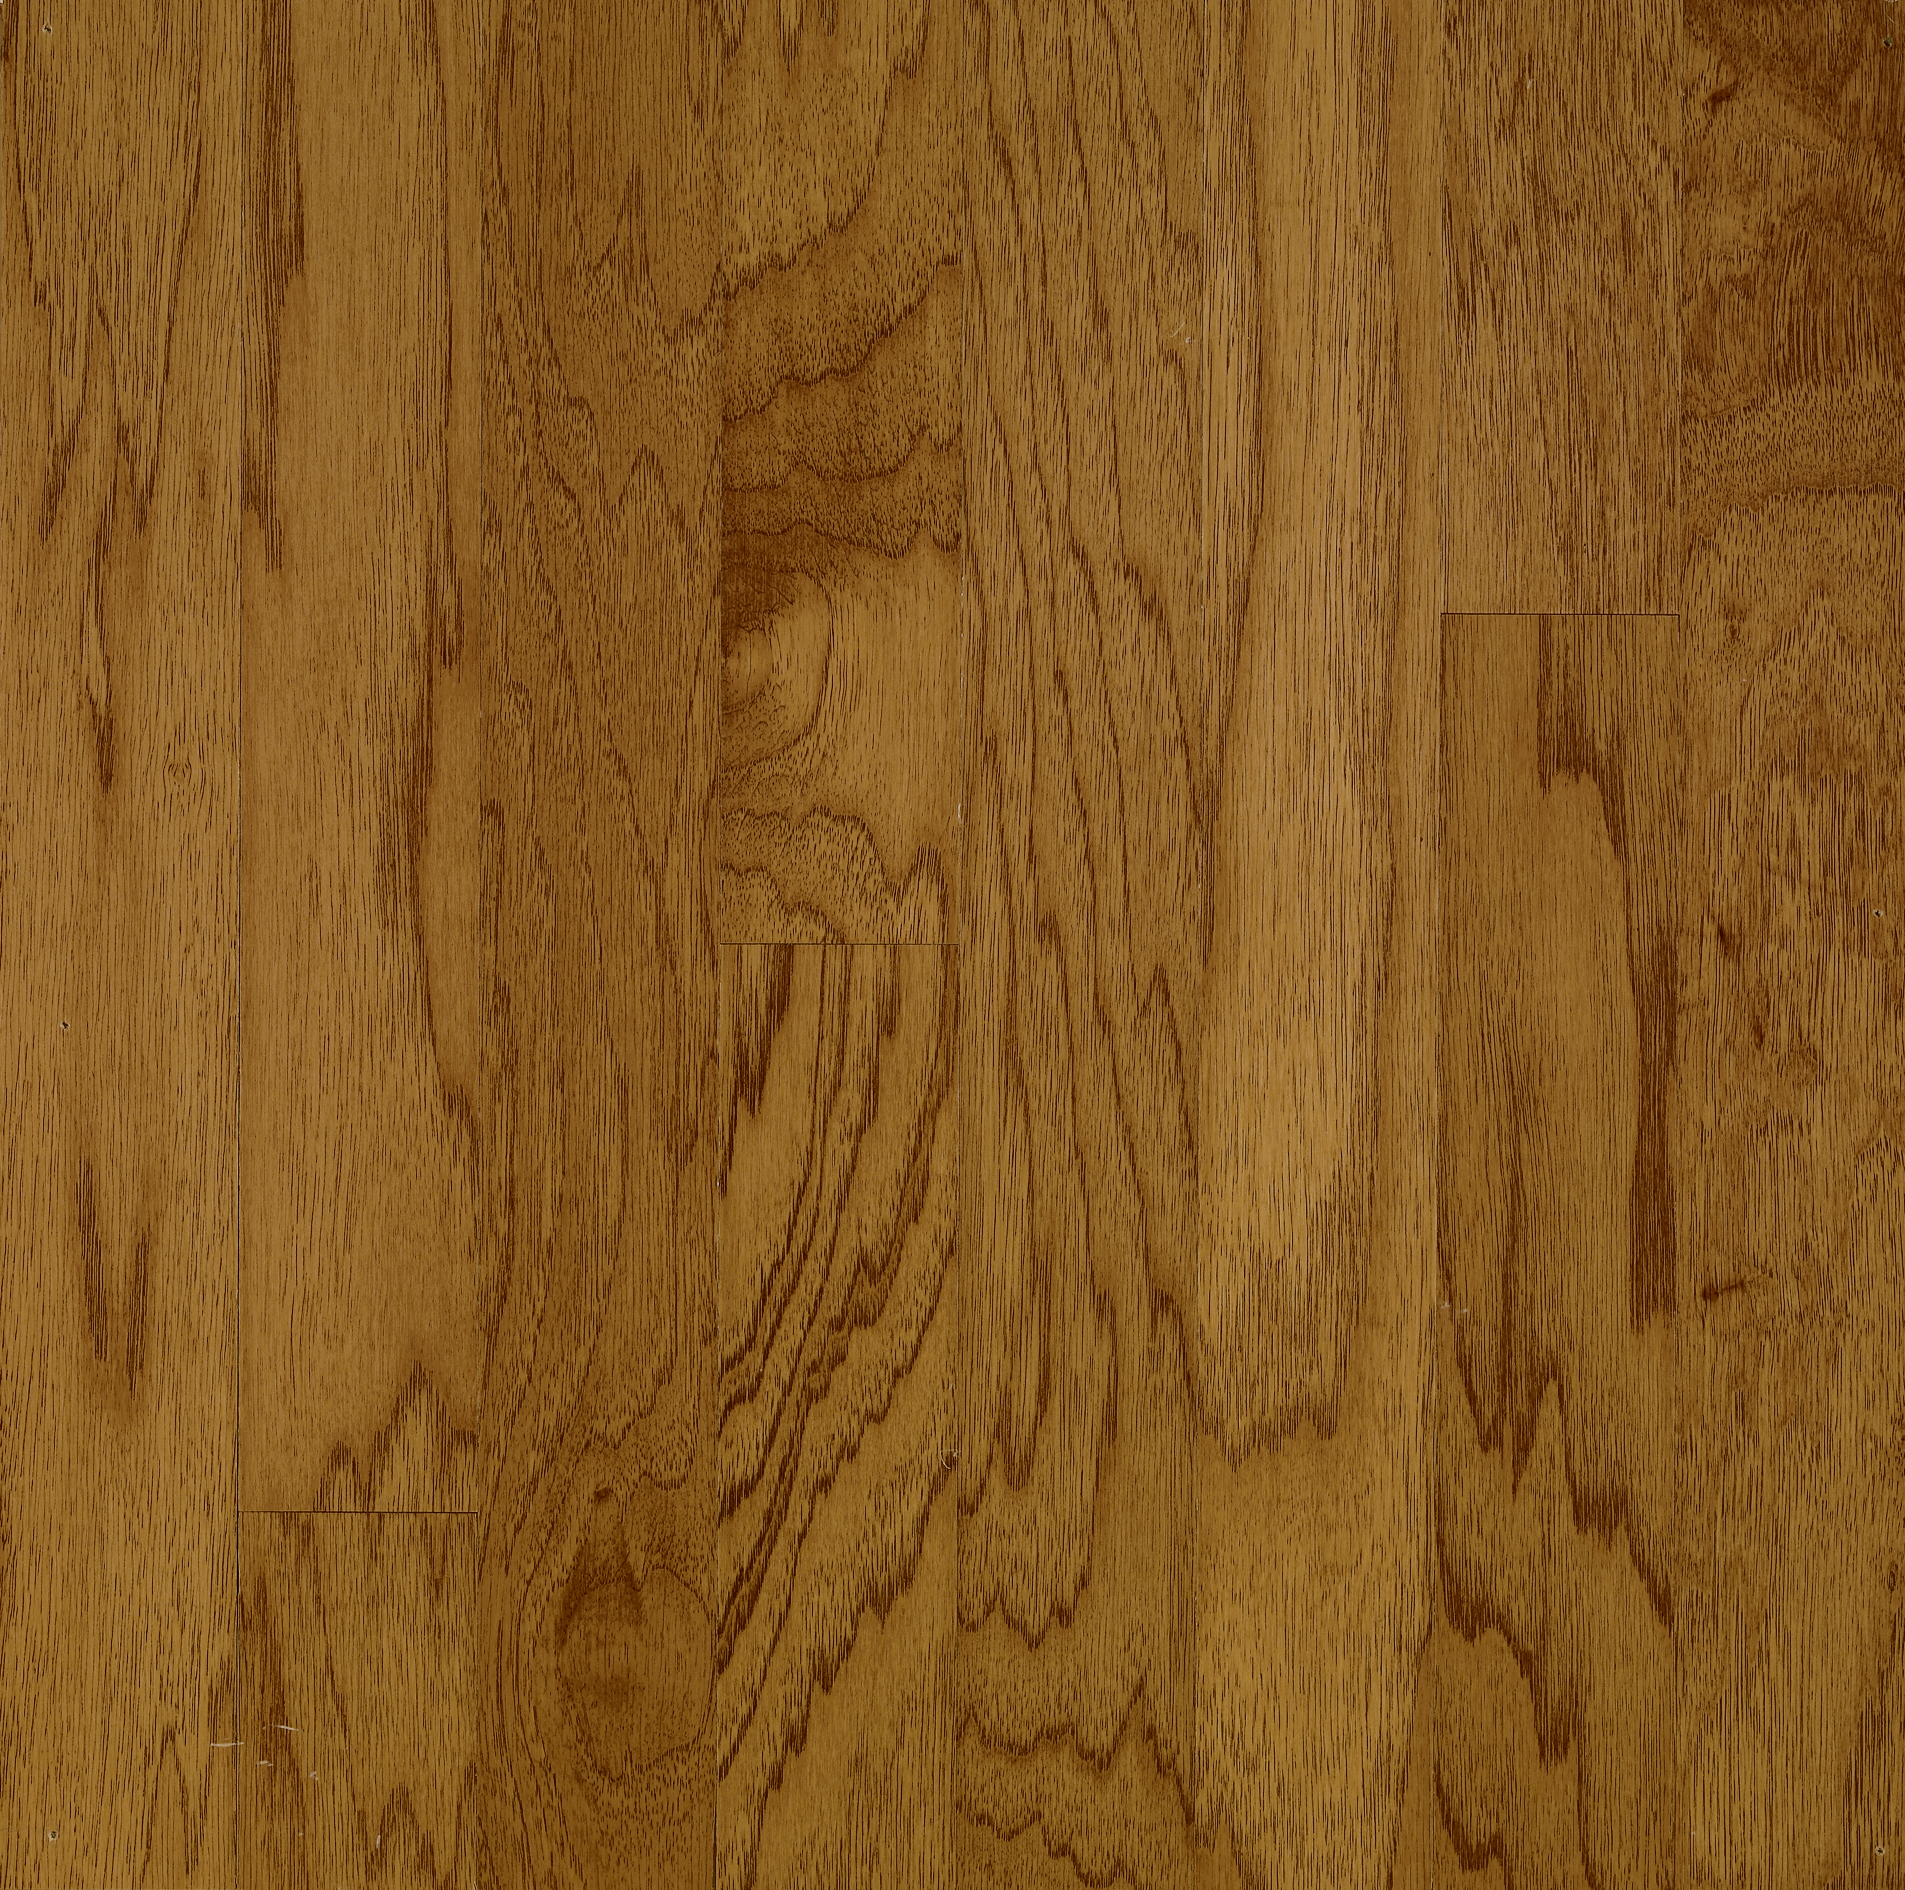 Hickory Solid Hardwood C5717, Mcdowell’s Hardwood Floors